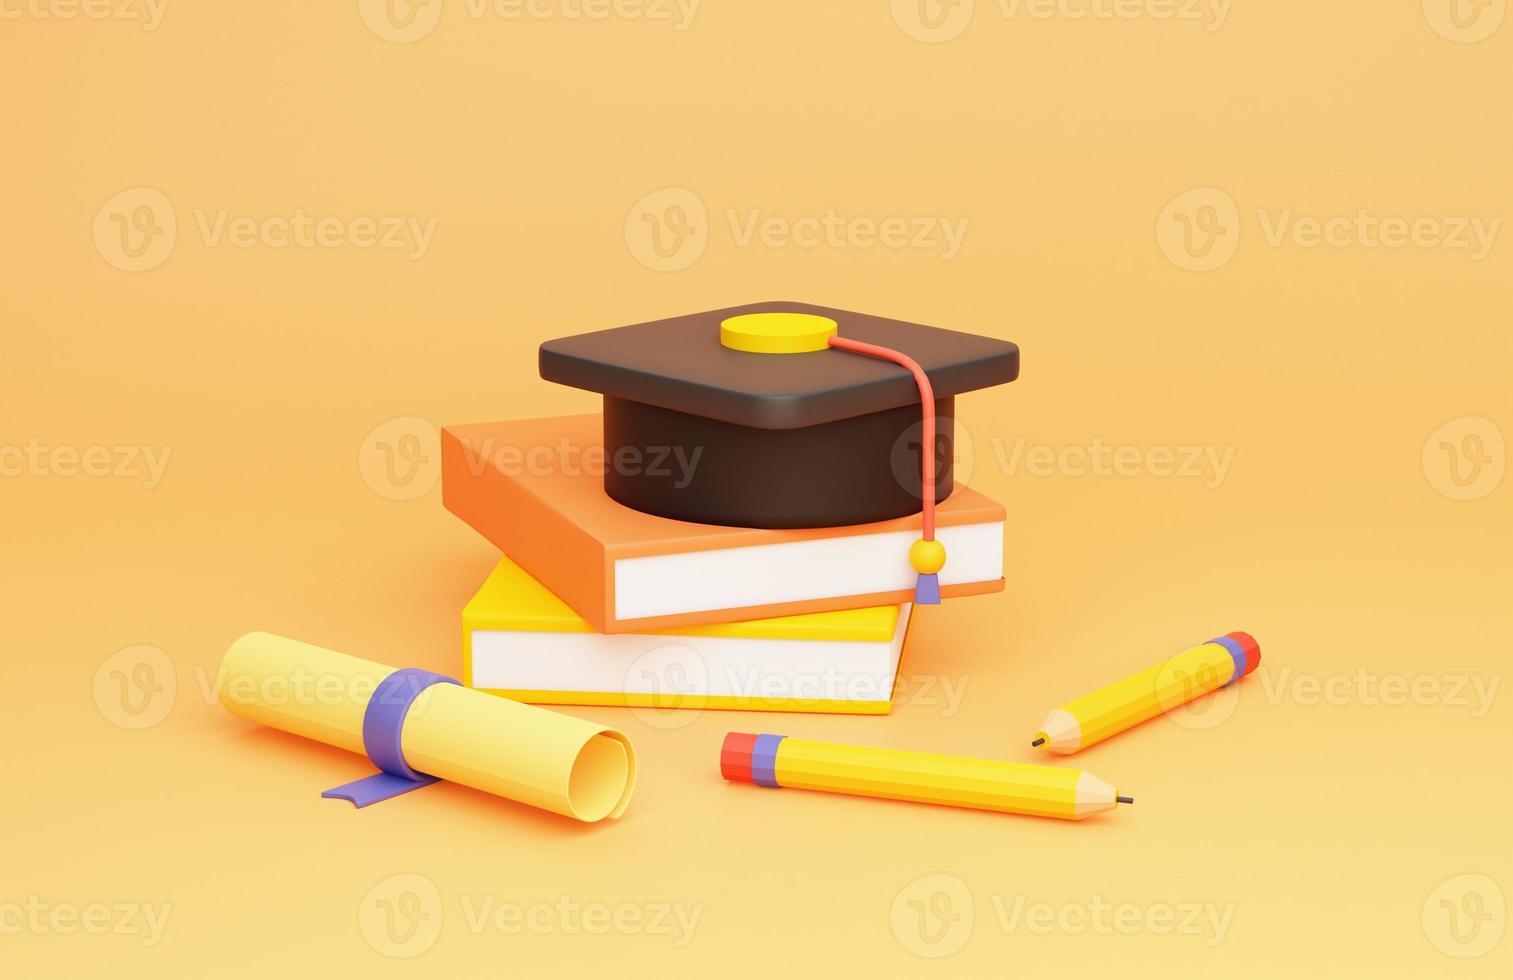 graduation cap on a pile of books, 2 pencils and graduation certificate orange background 3d illustration photo